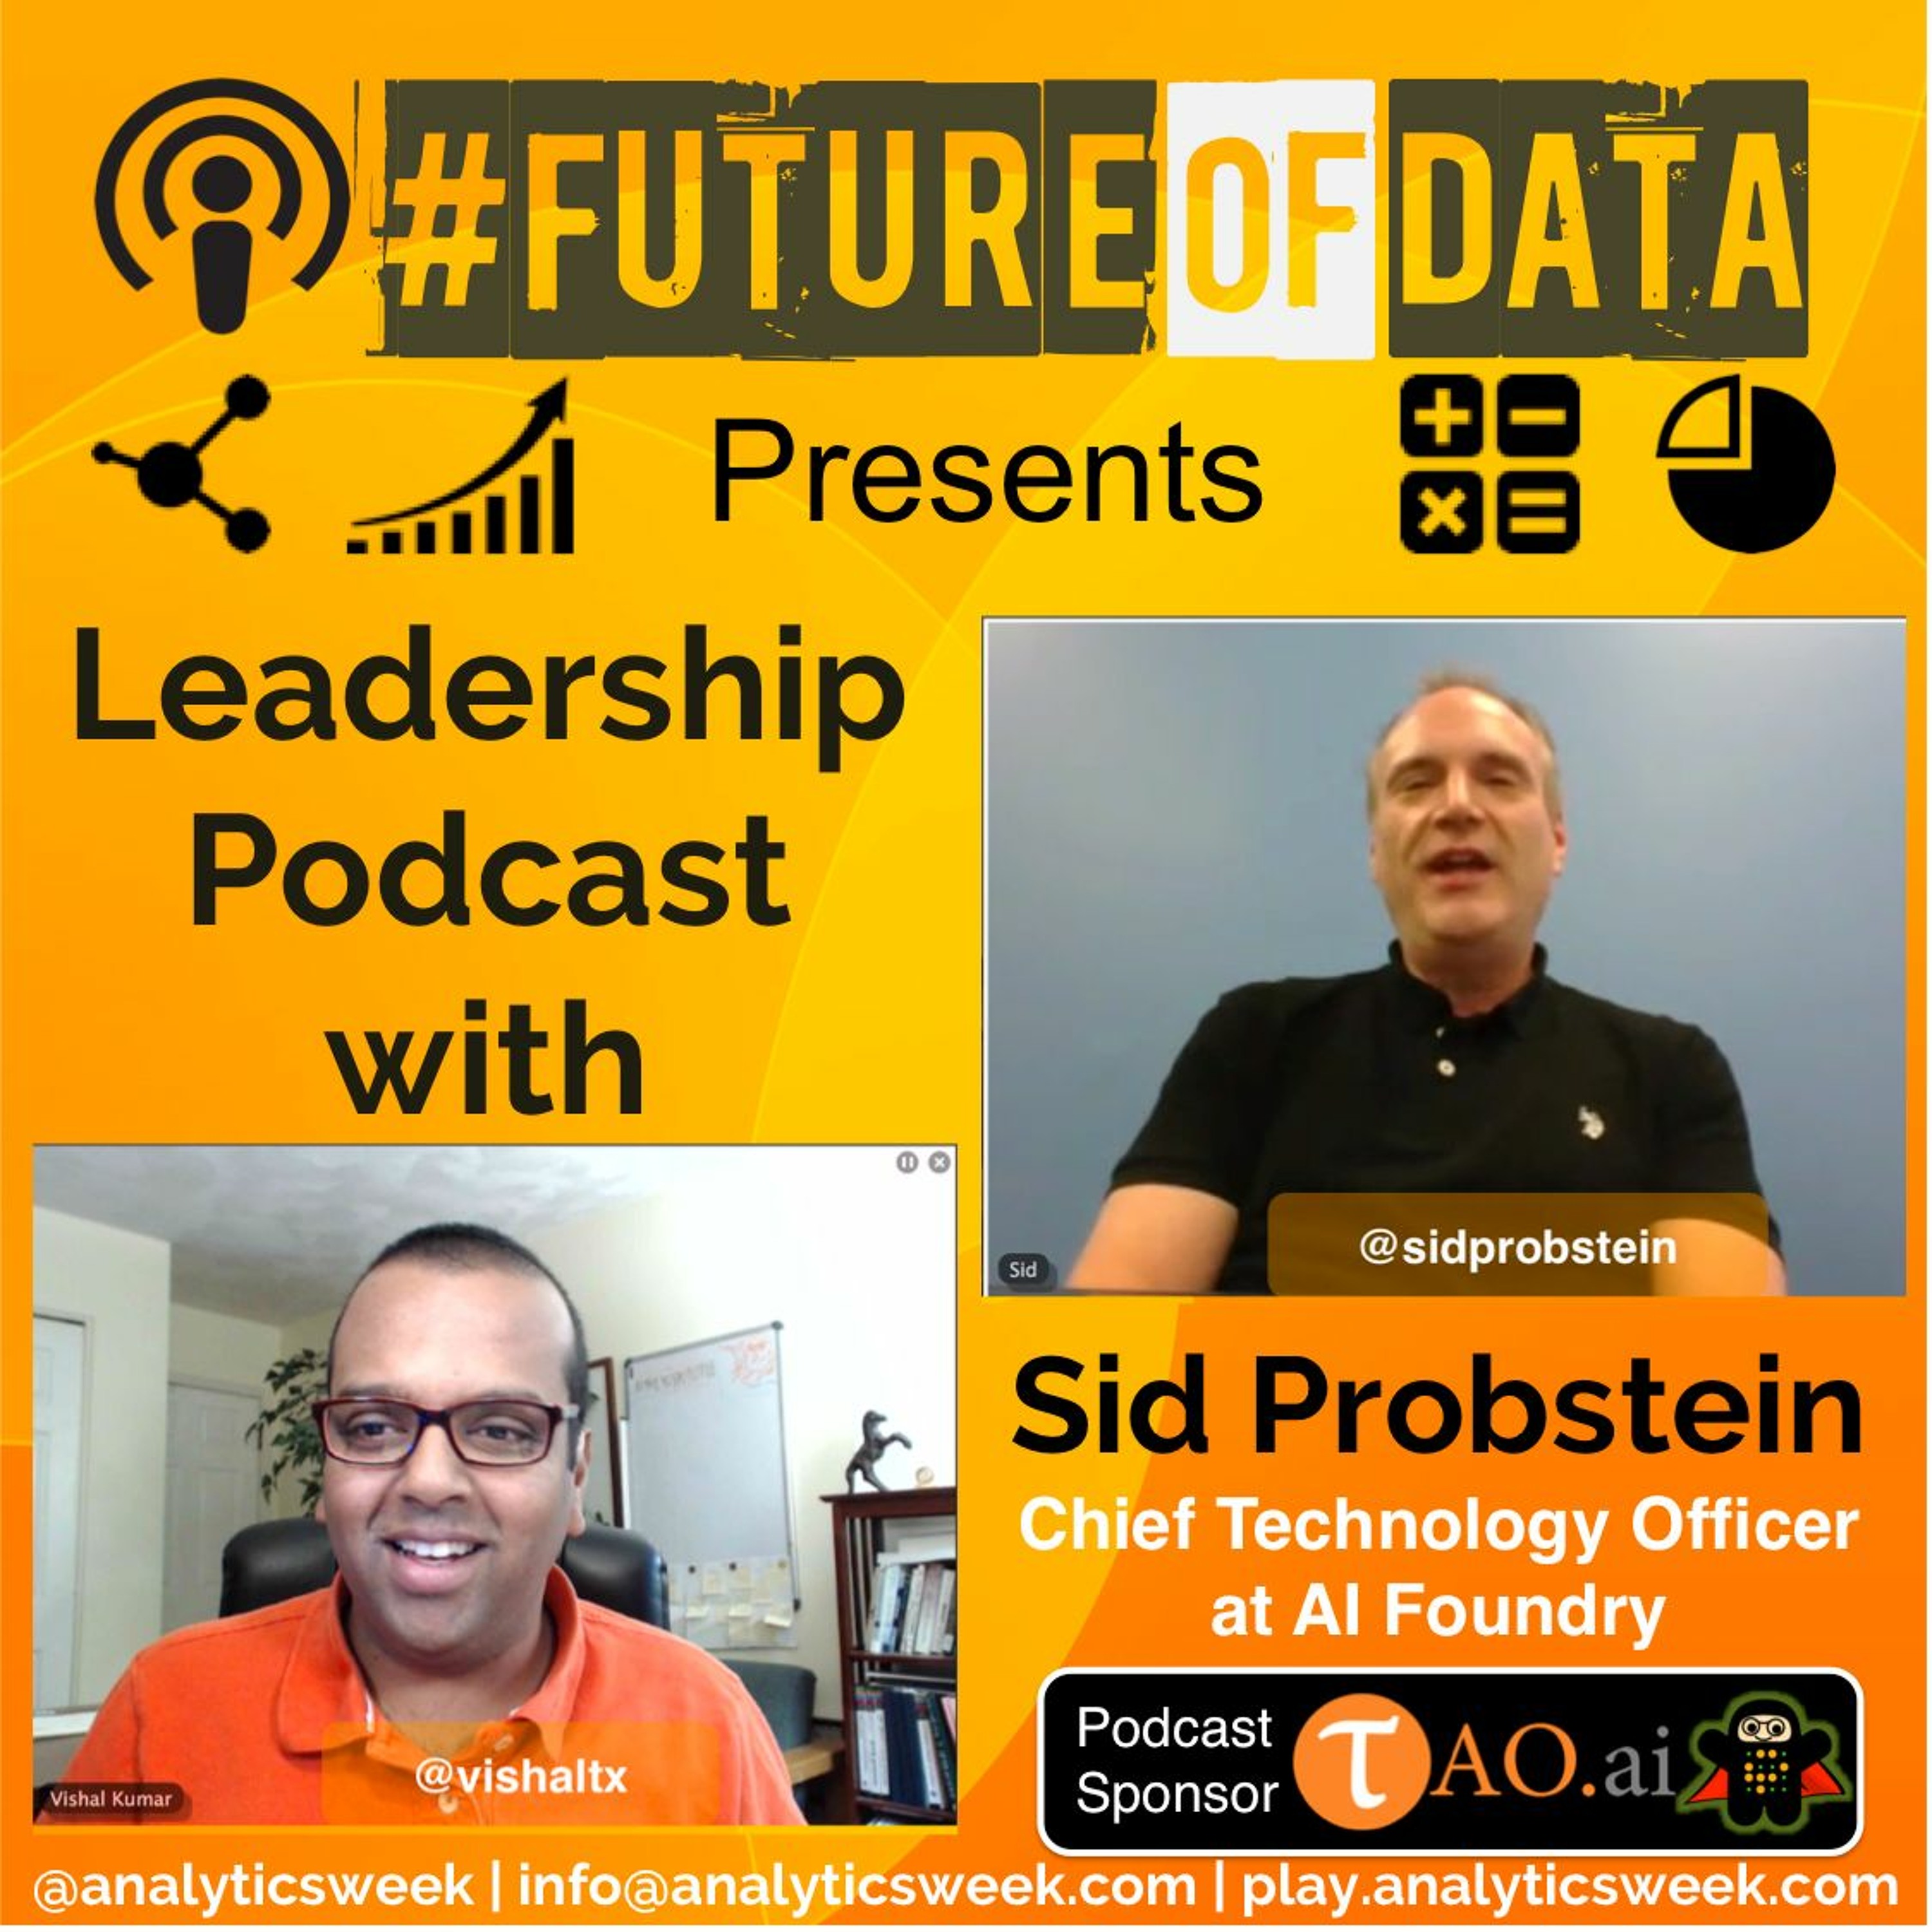 @SidProbstein / @AIFoundry on Leading #DataDriven Technology Transformation